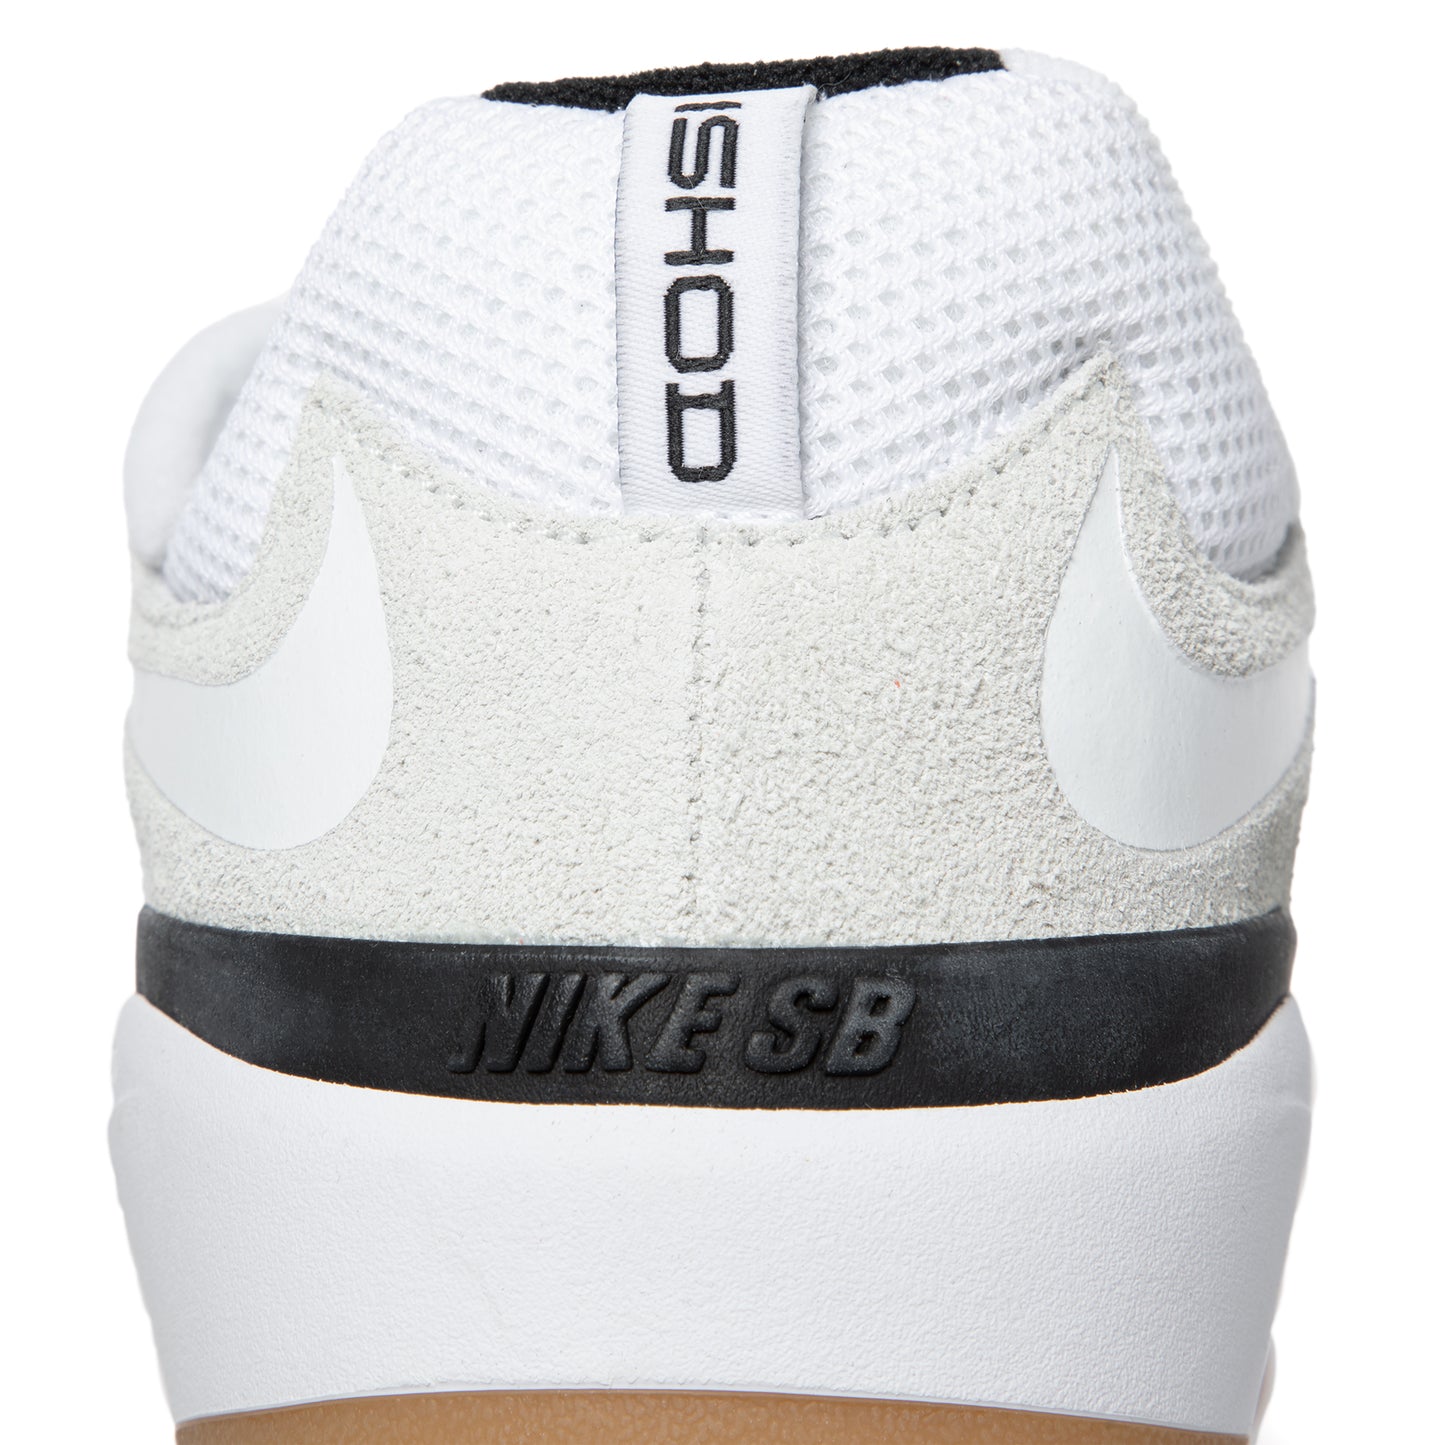 Nike SB Ishod Wair (Summit White/Black)